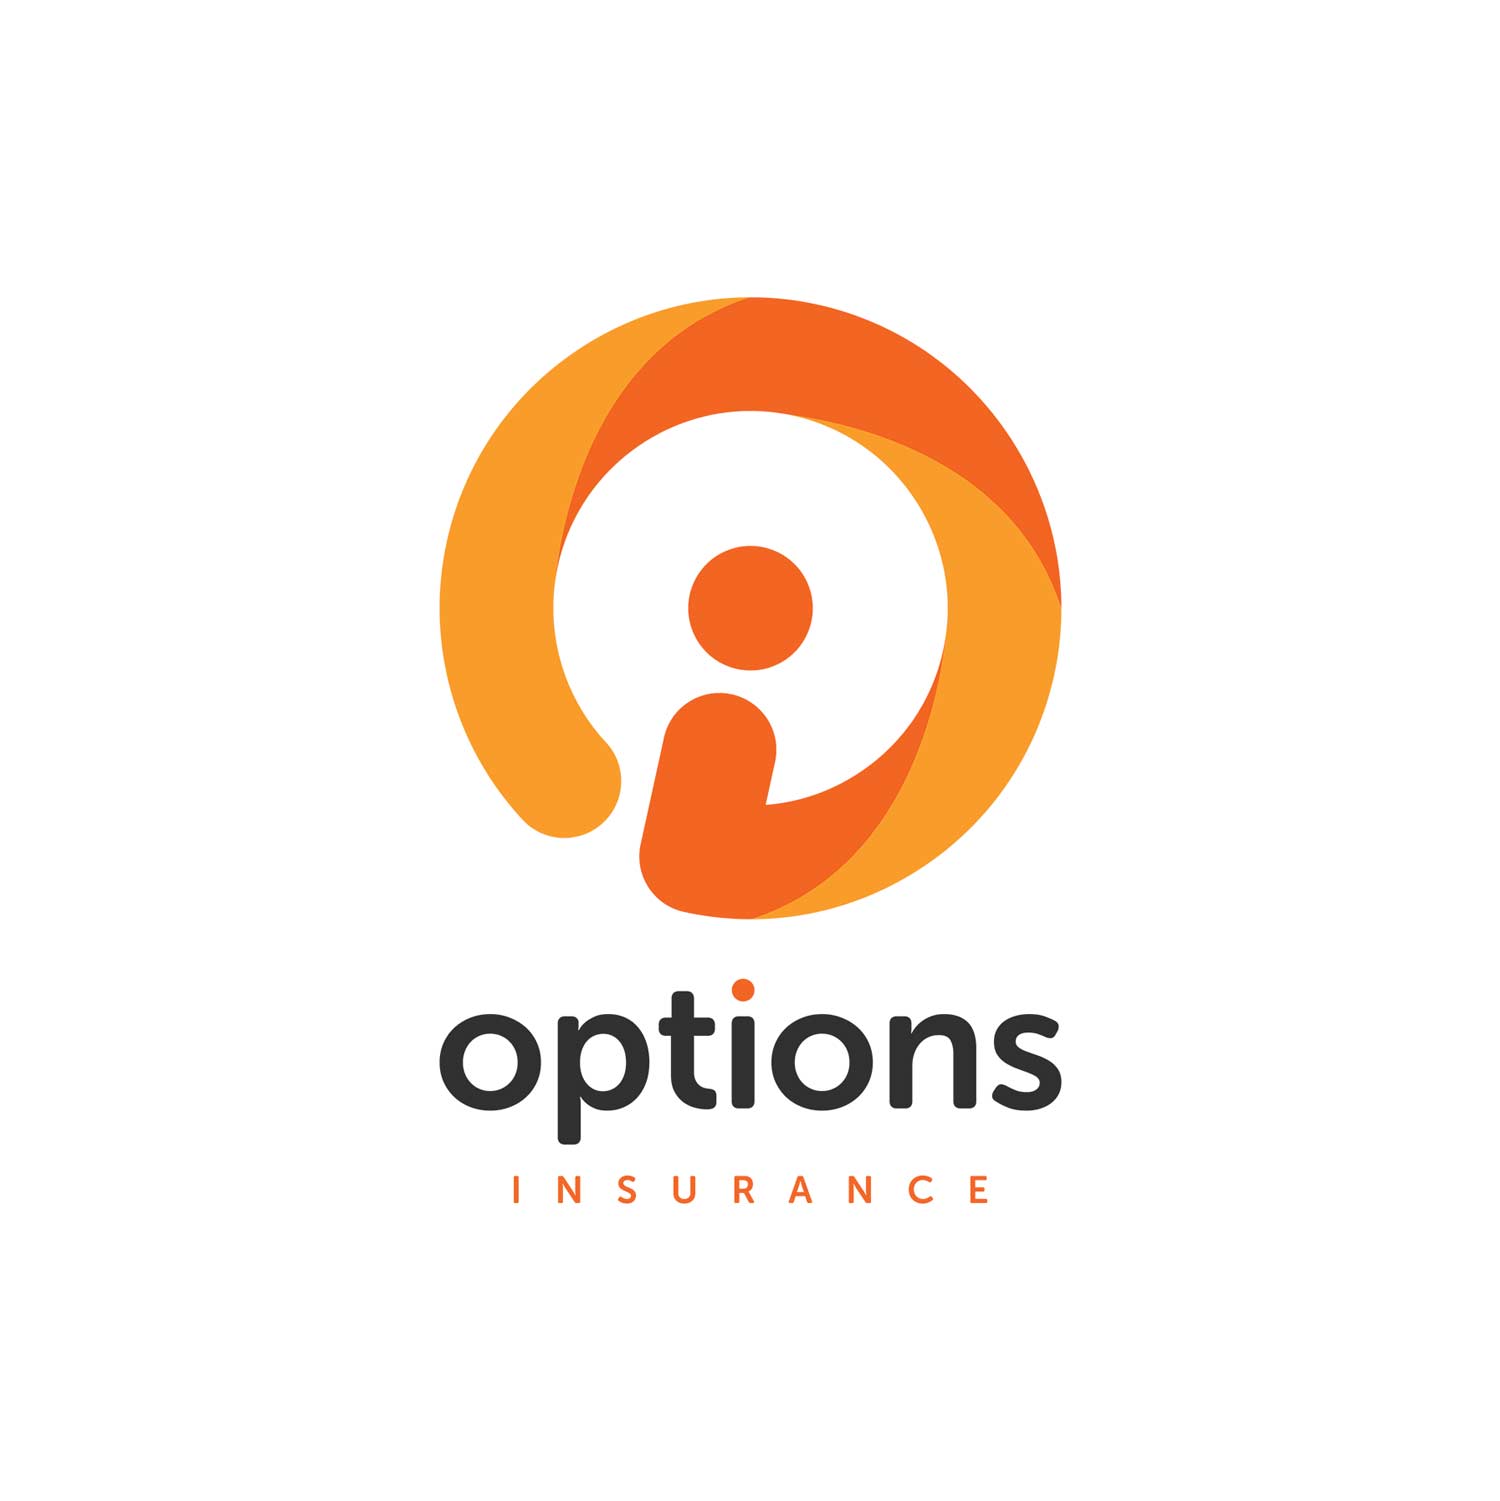 Options Insurance logo by OLSON MCINTYRE